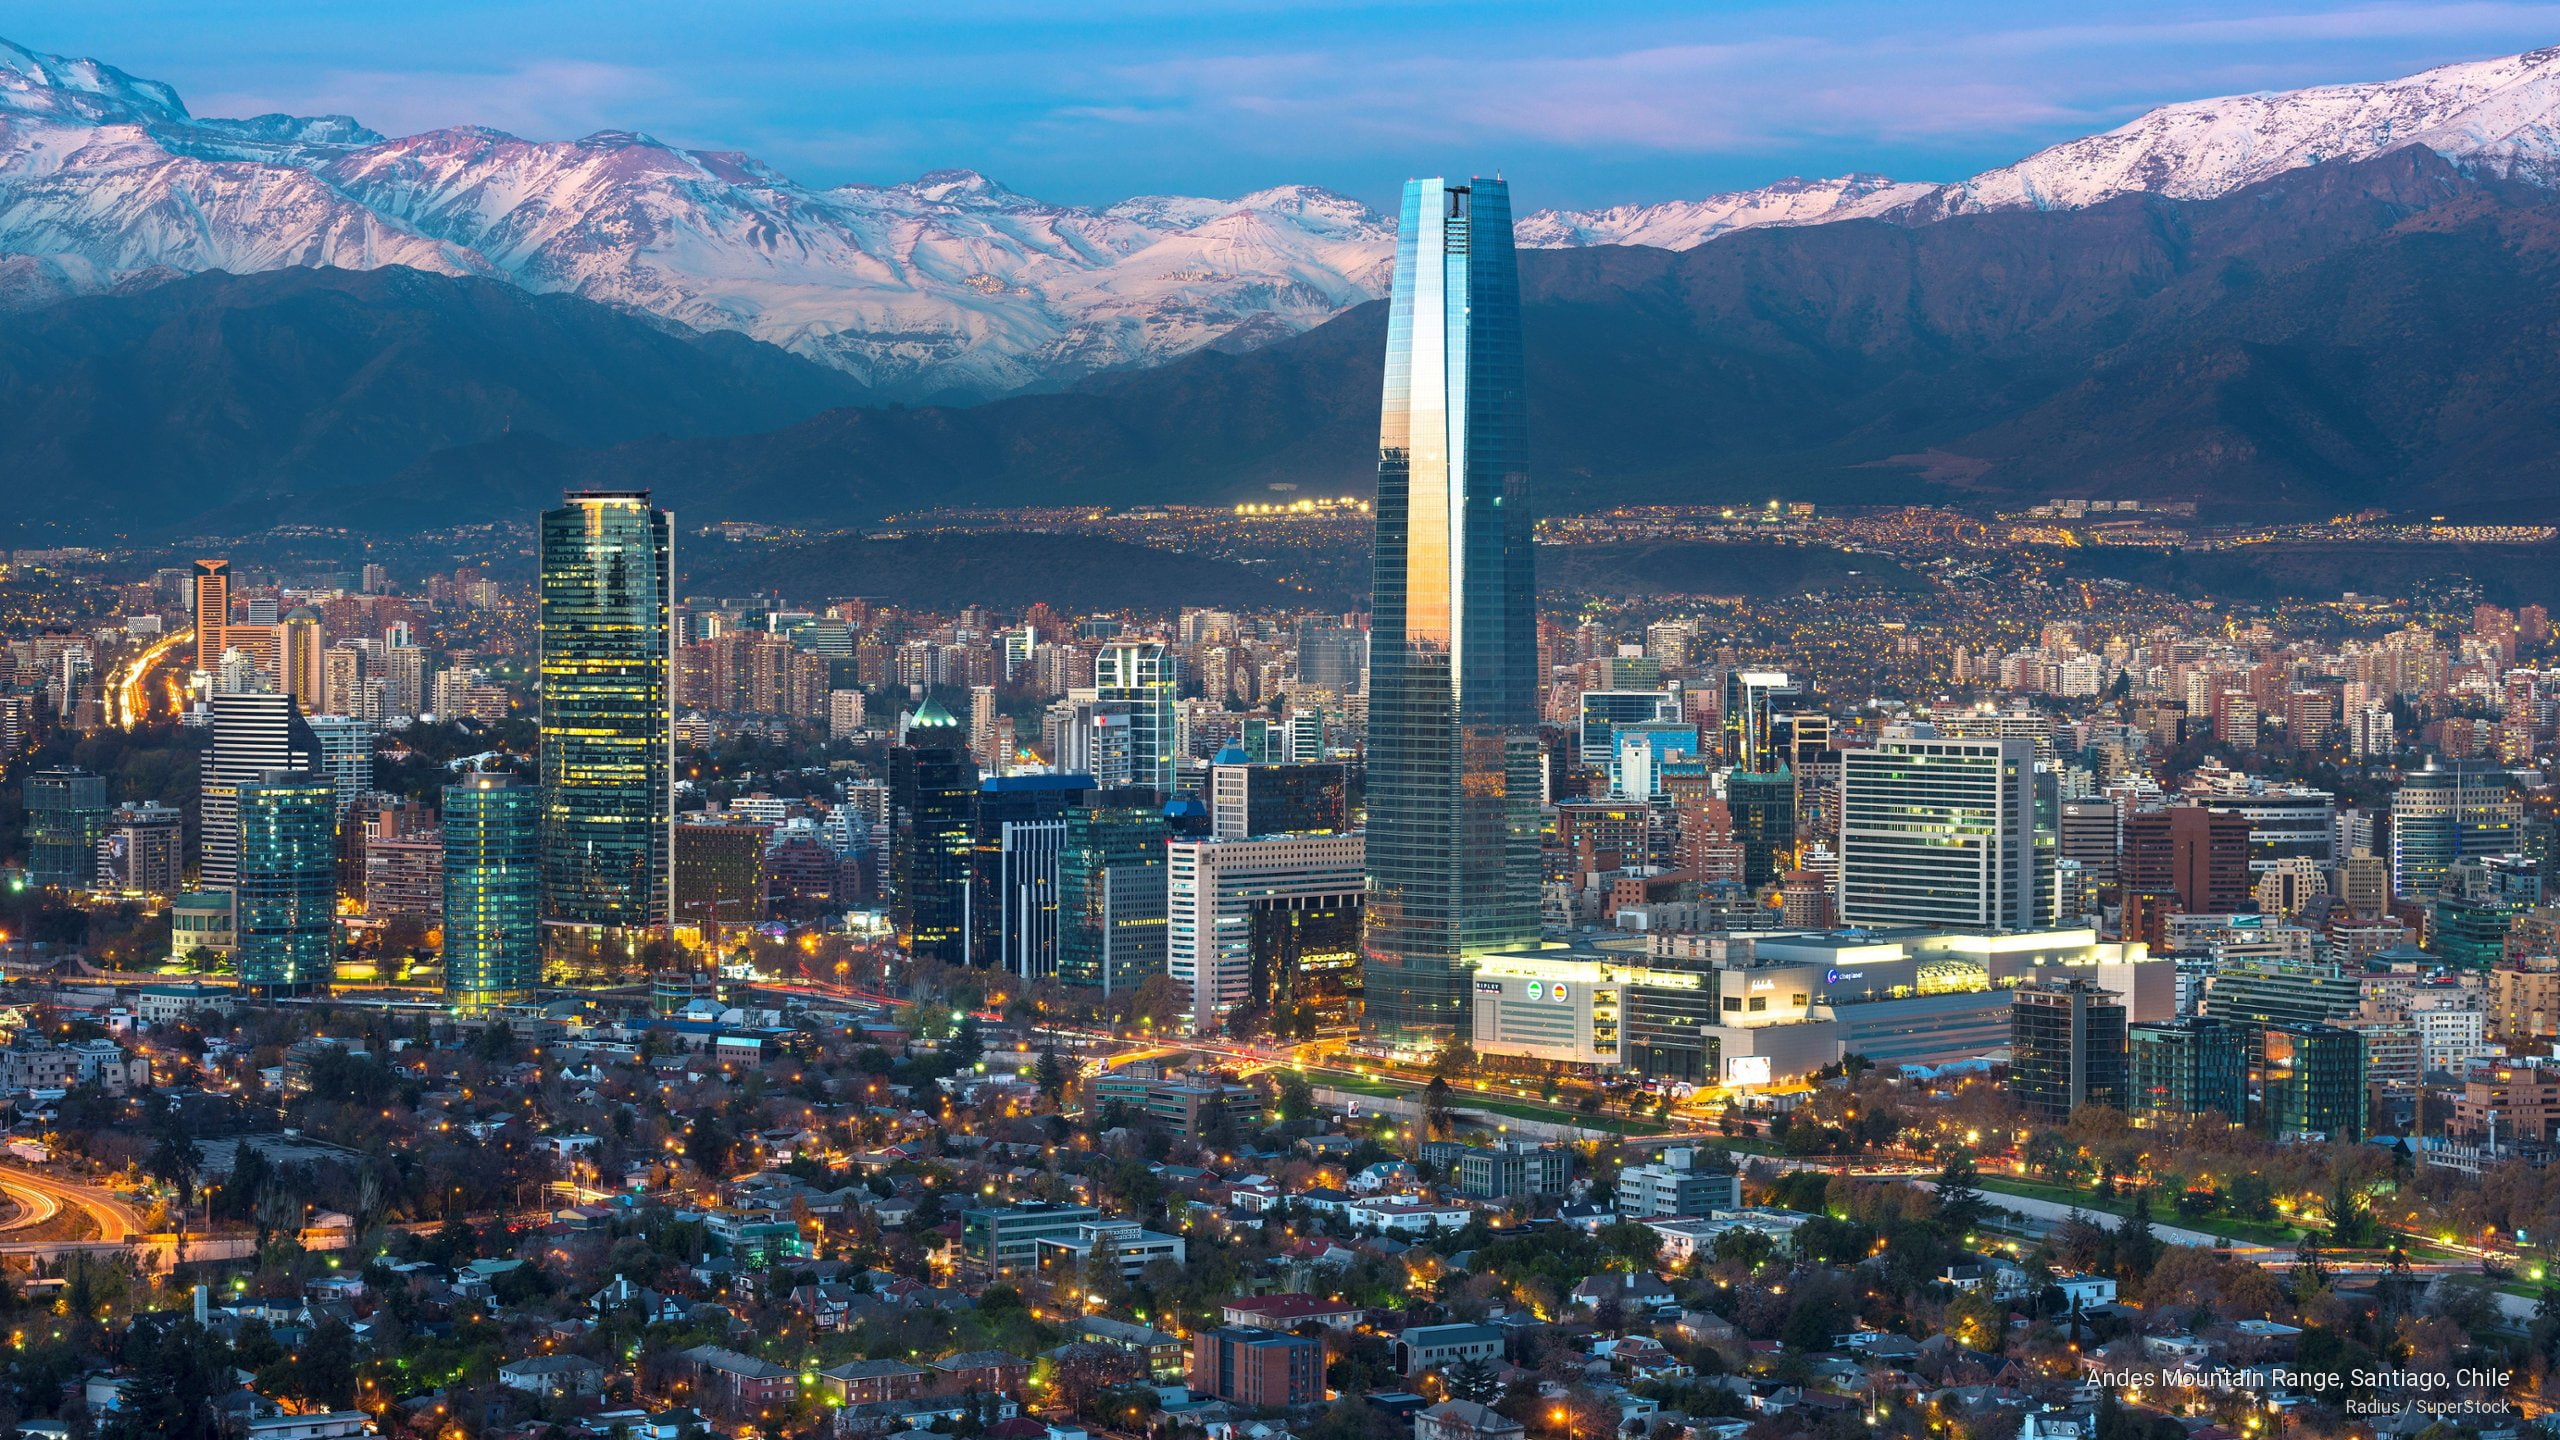 Andes Mountain Range, Santiago, Chile, Architecture